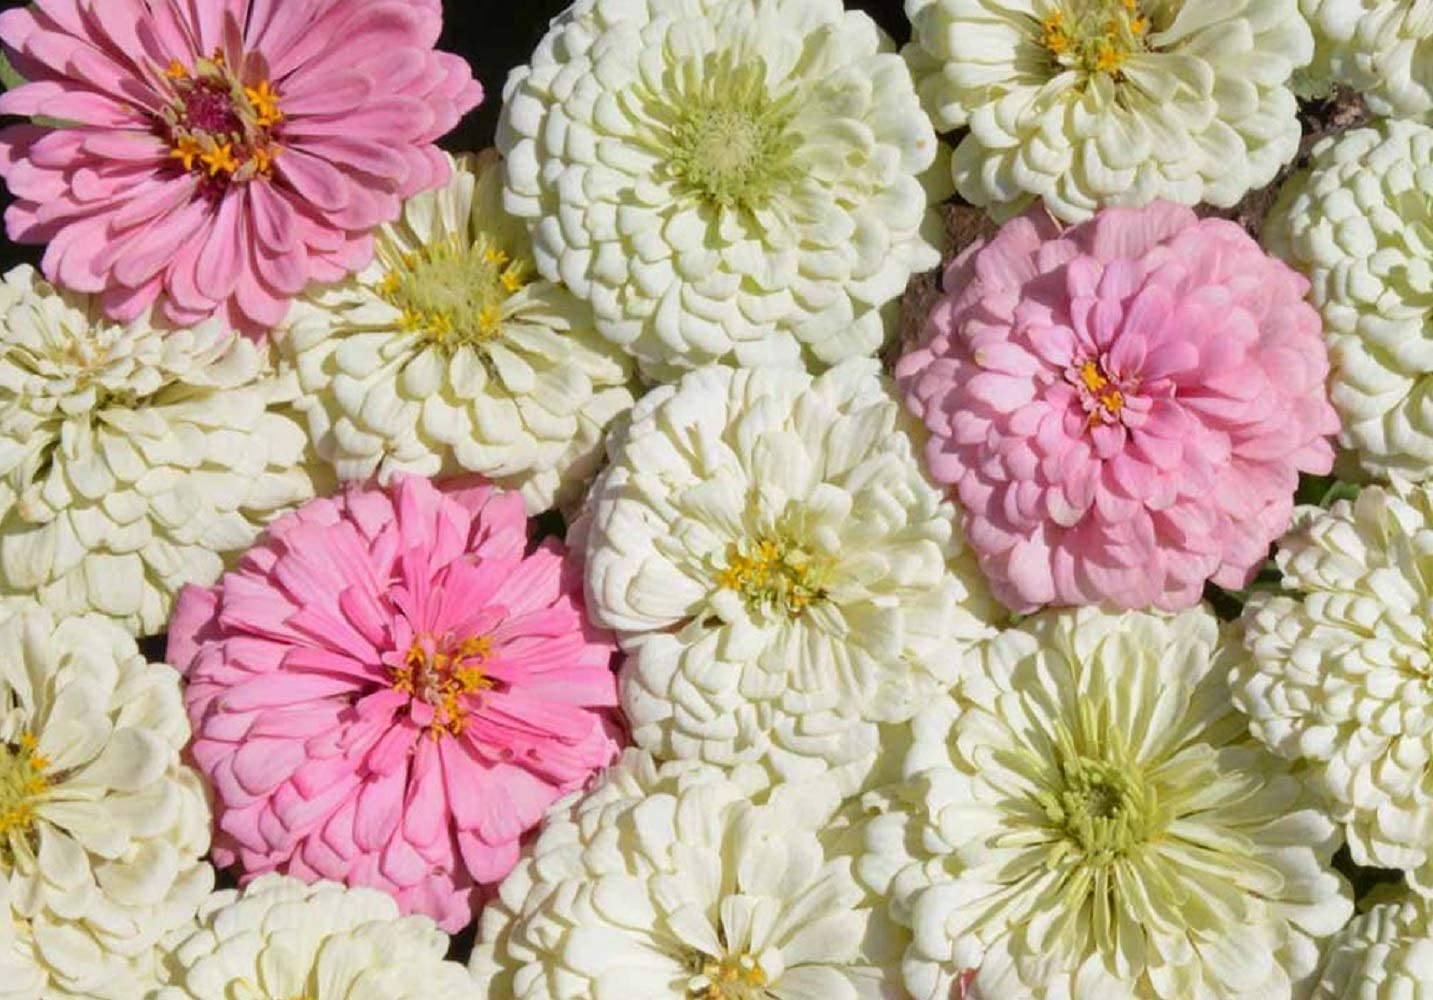 Blushing Bride Zinnia Mix, 200 Flower Seeds Per Packet